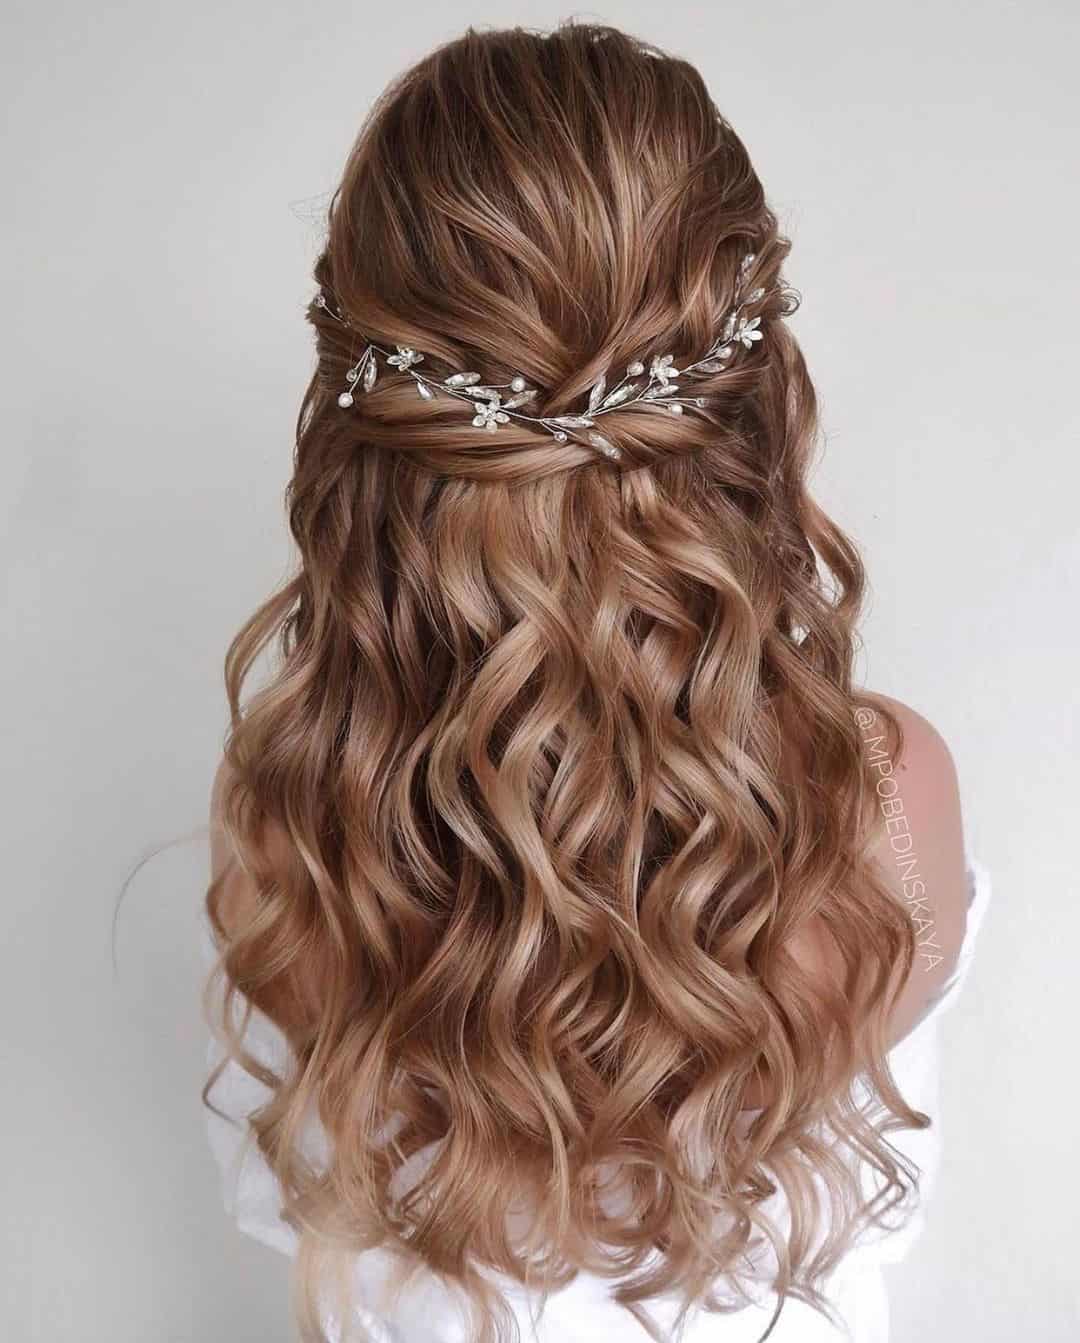 hairstyle with hair vine tiara